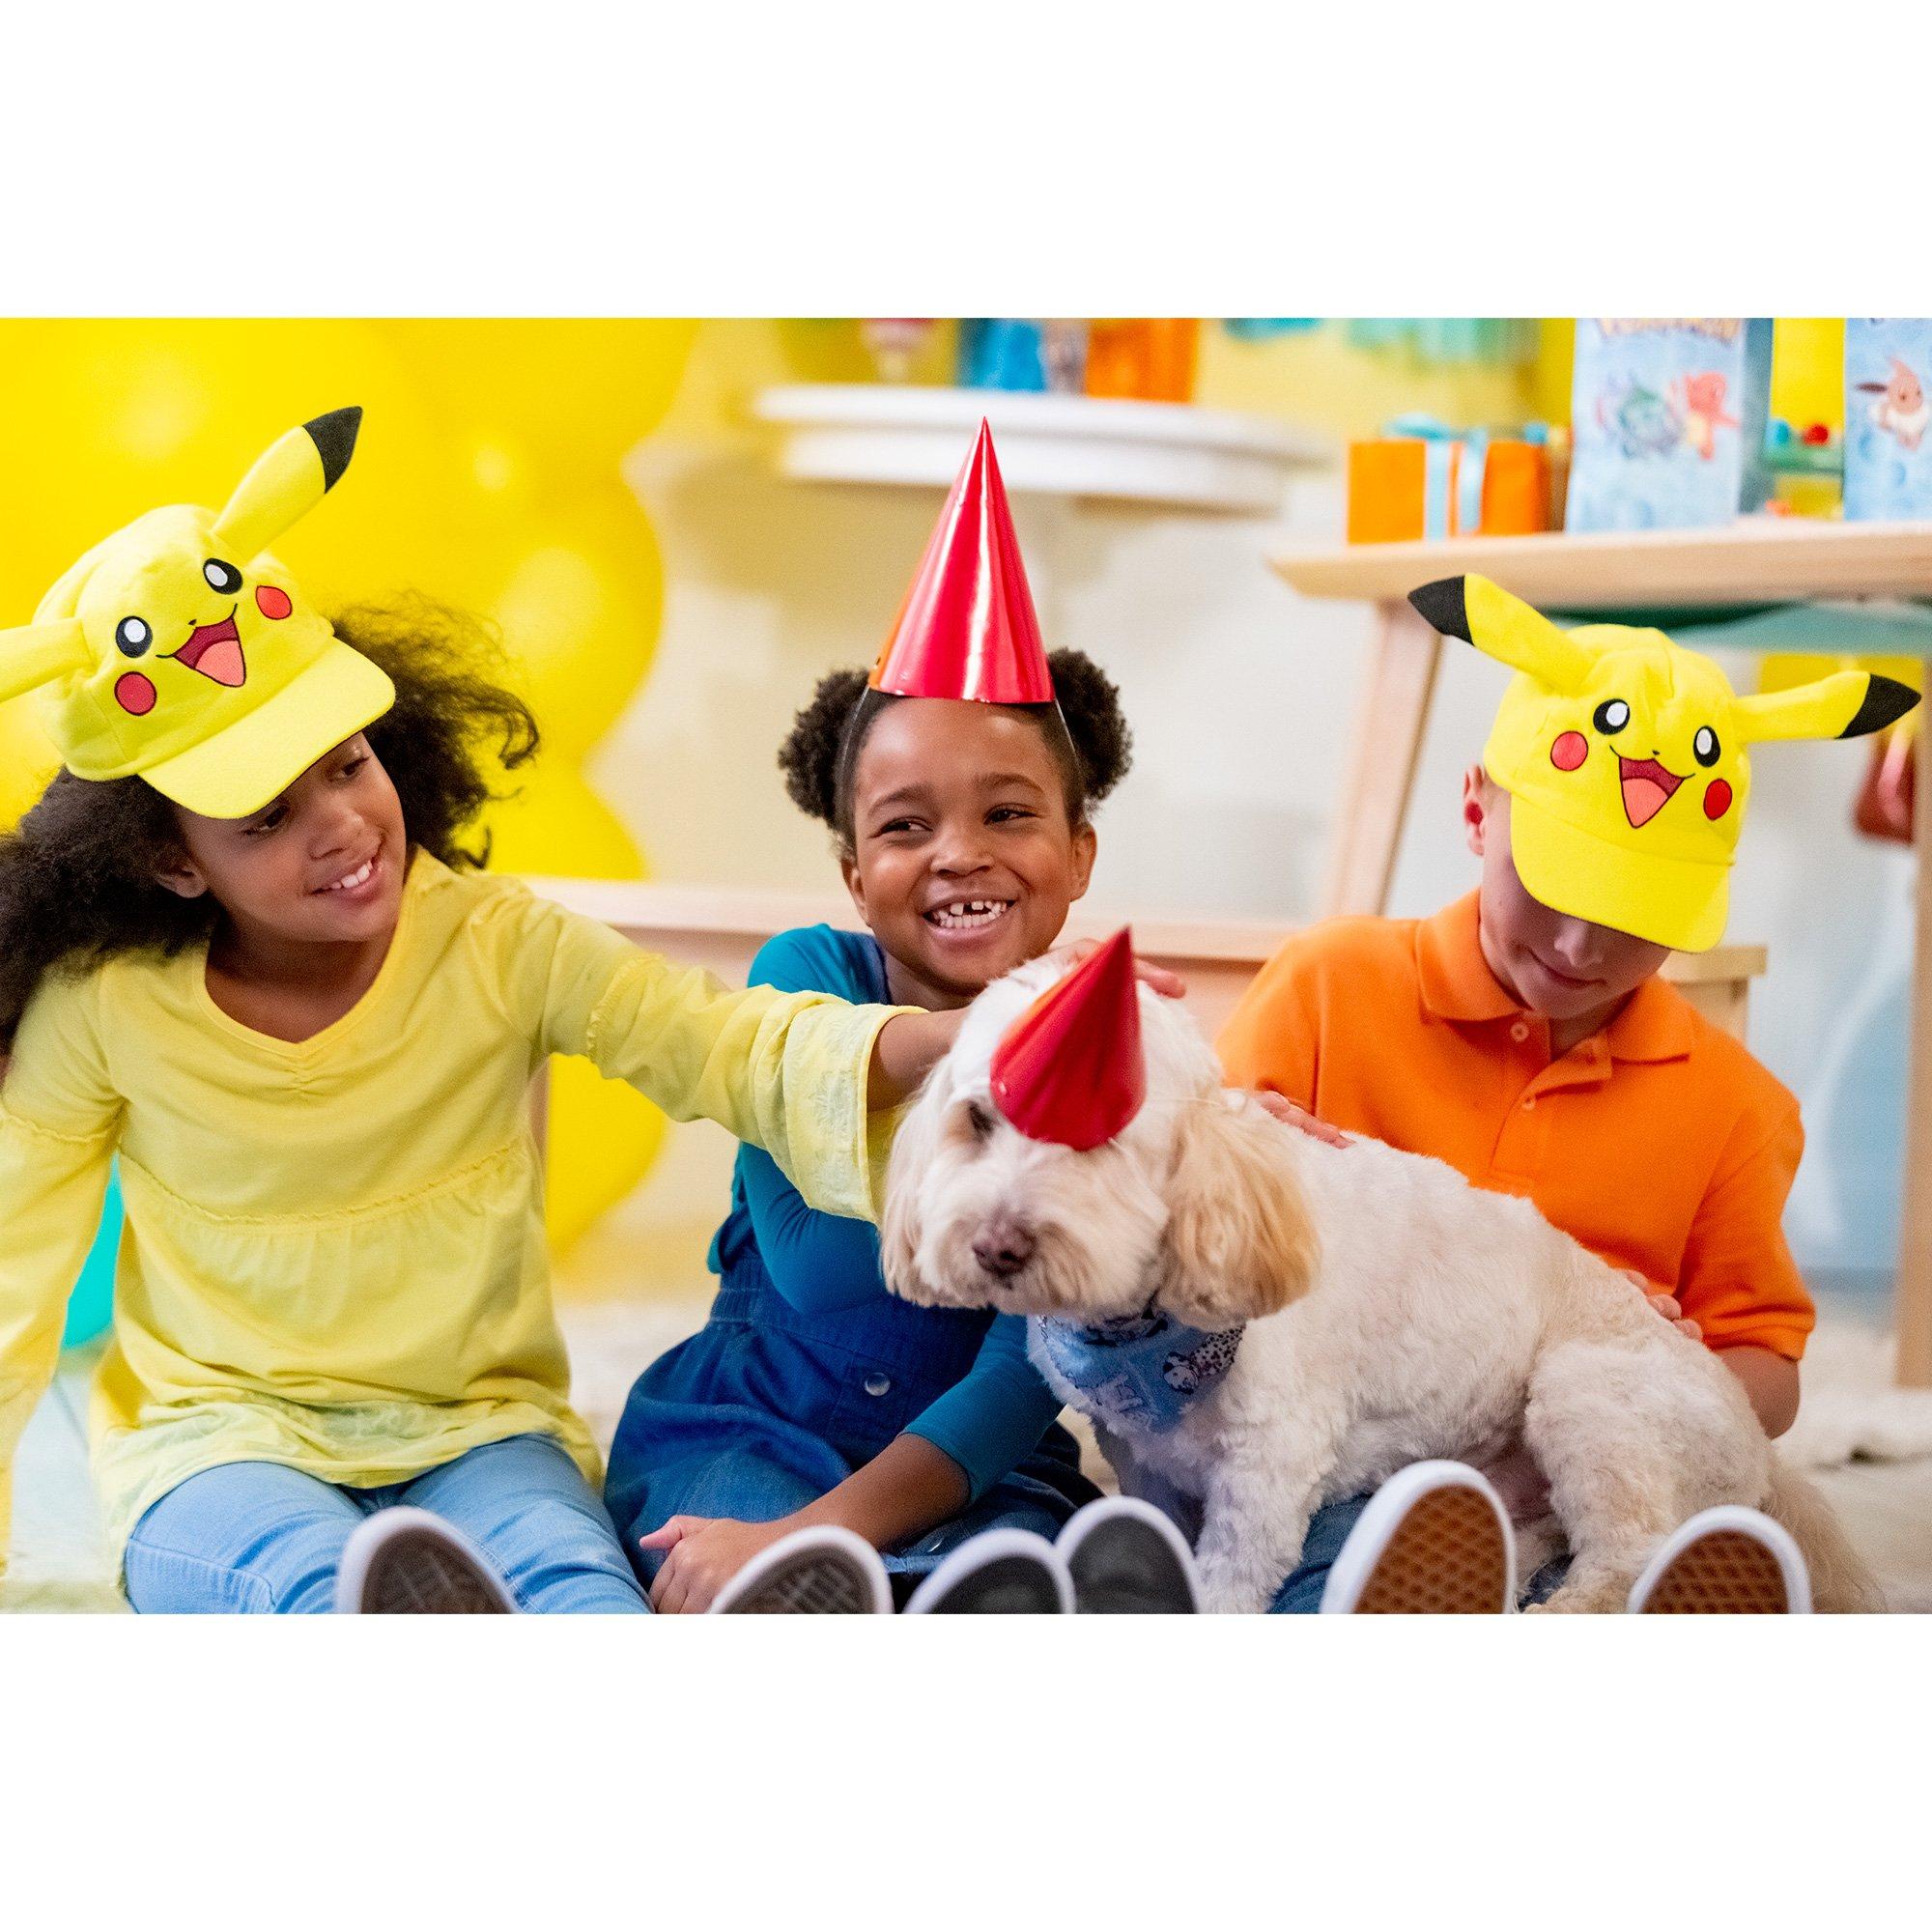 Robe pokémon Pikachu - Pokemon - 6 ans